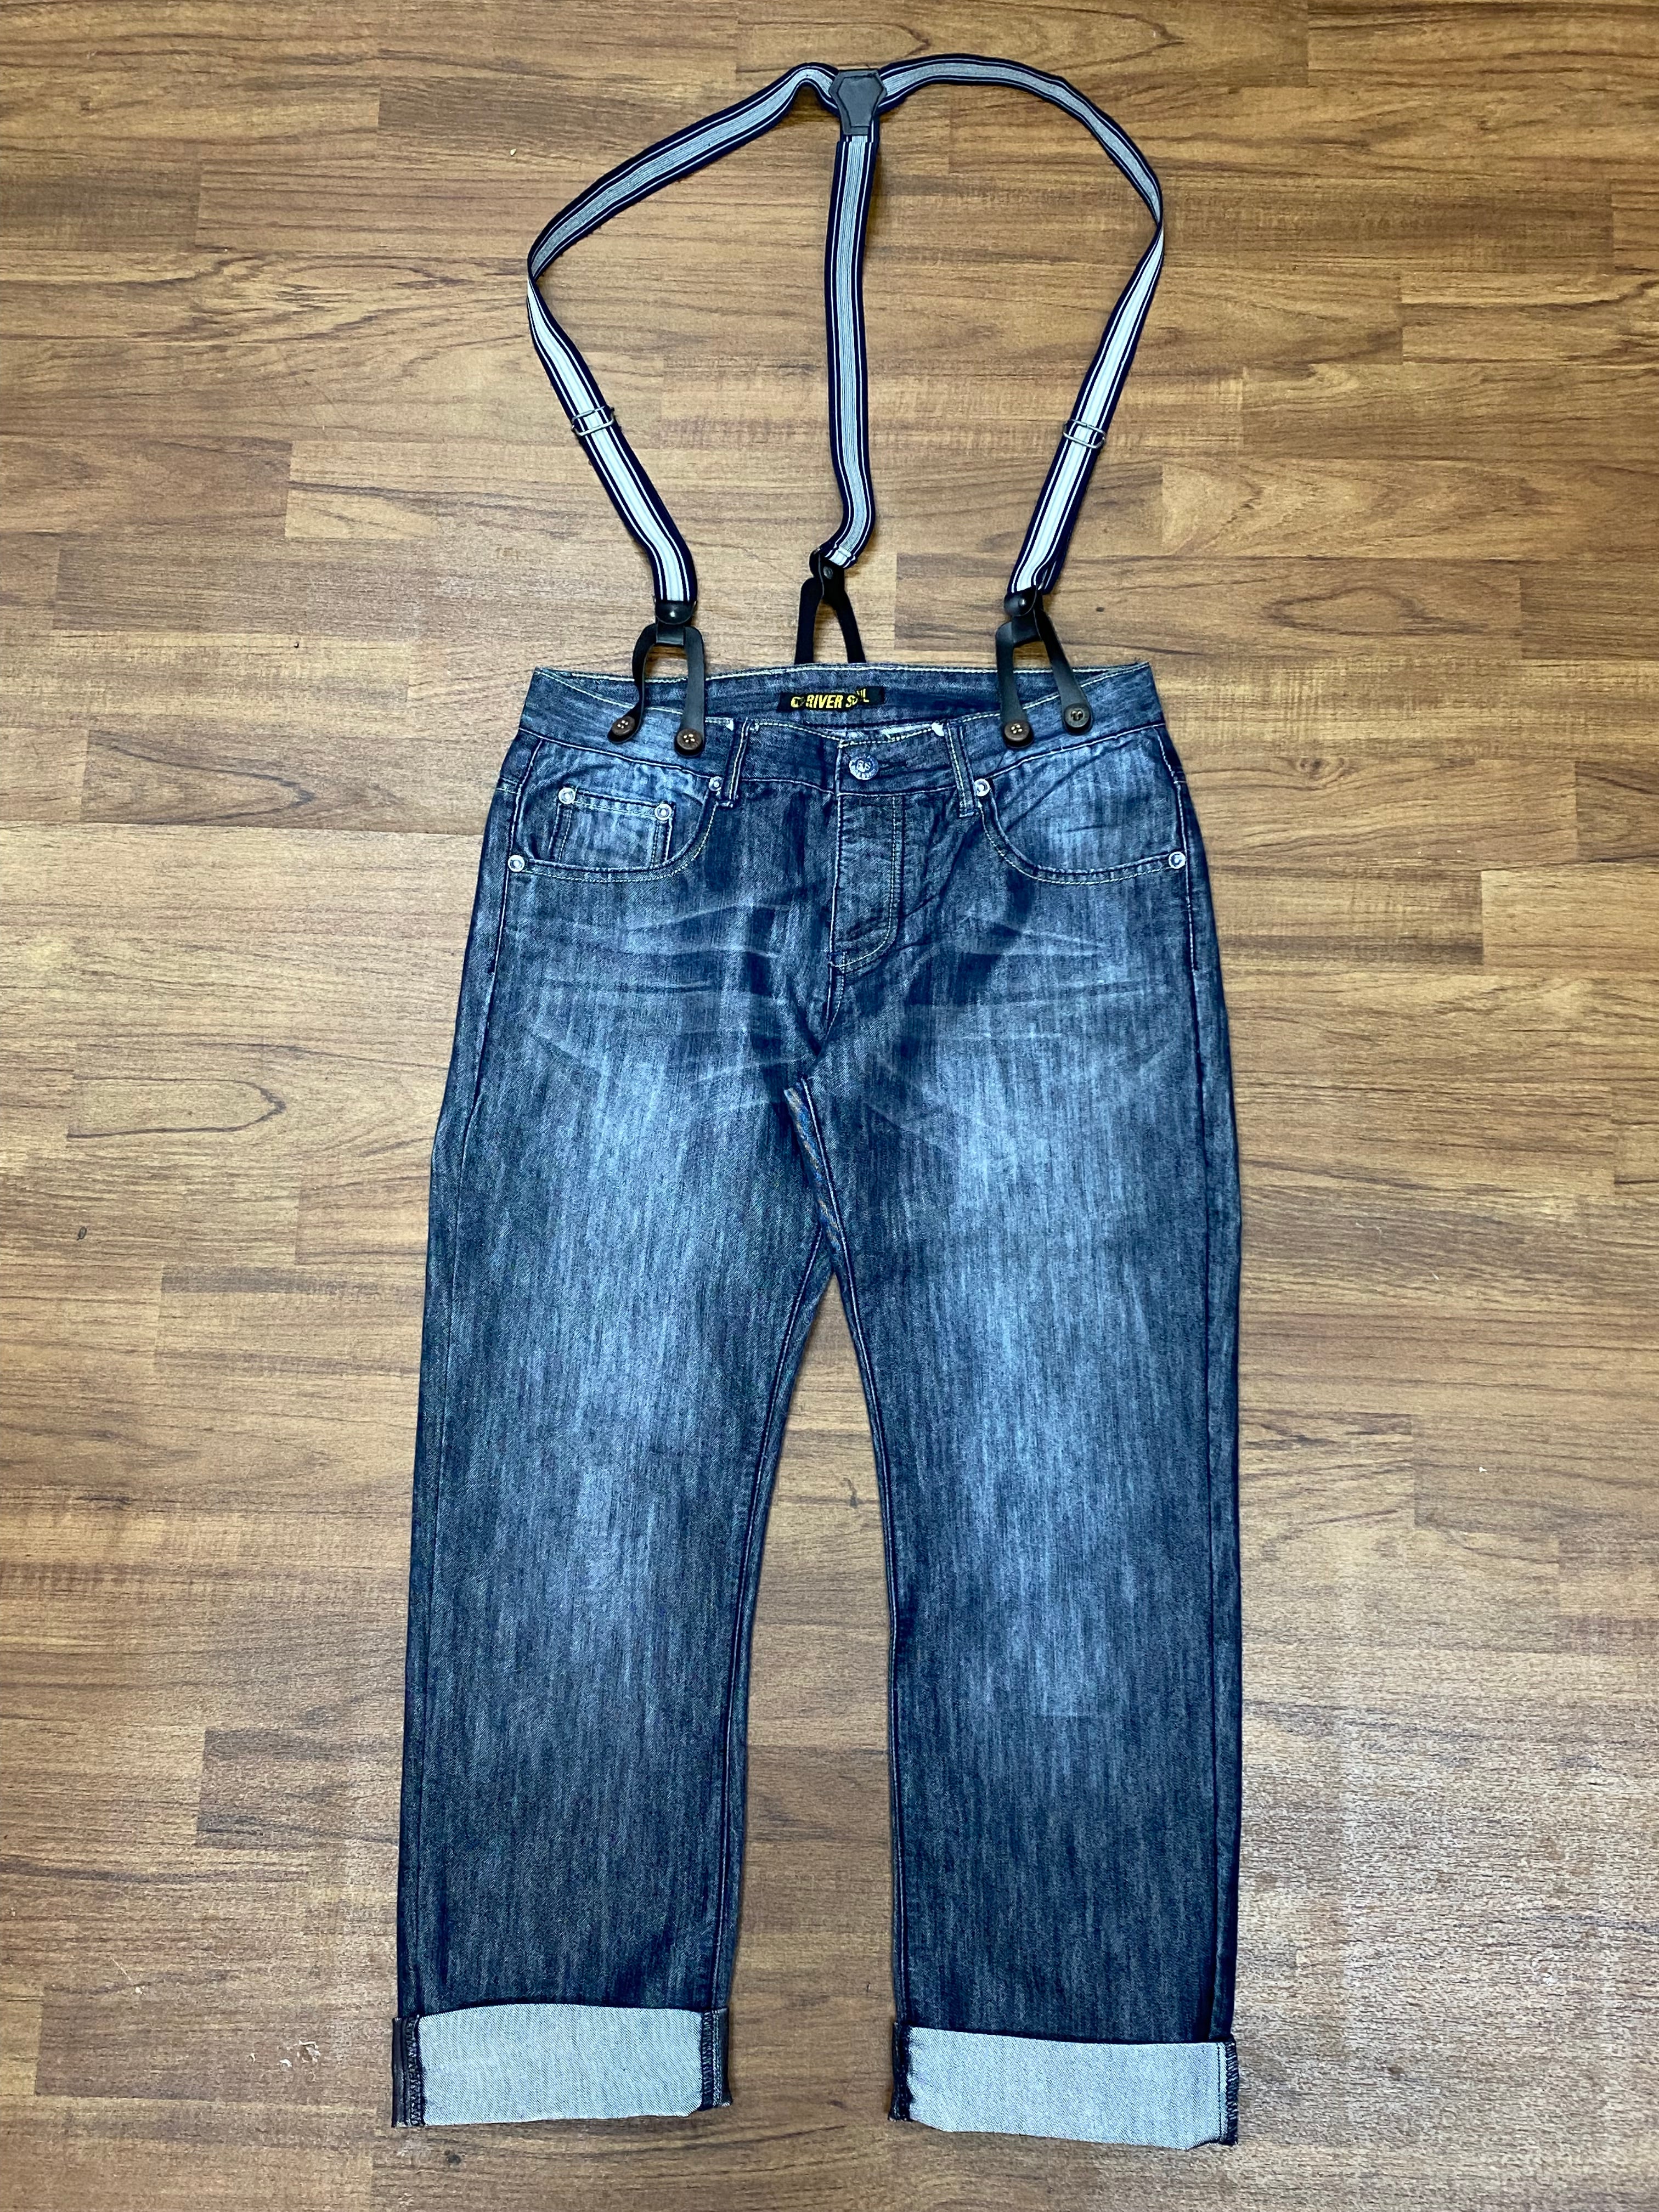 Jeanshose mit Hosenträger im 50er Jahre Retro-Stil, Size: 36/25